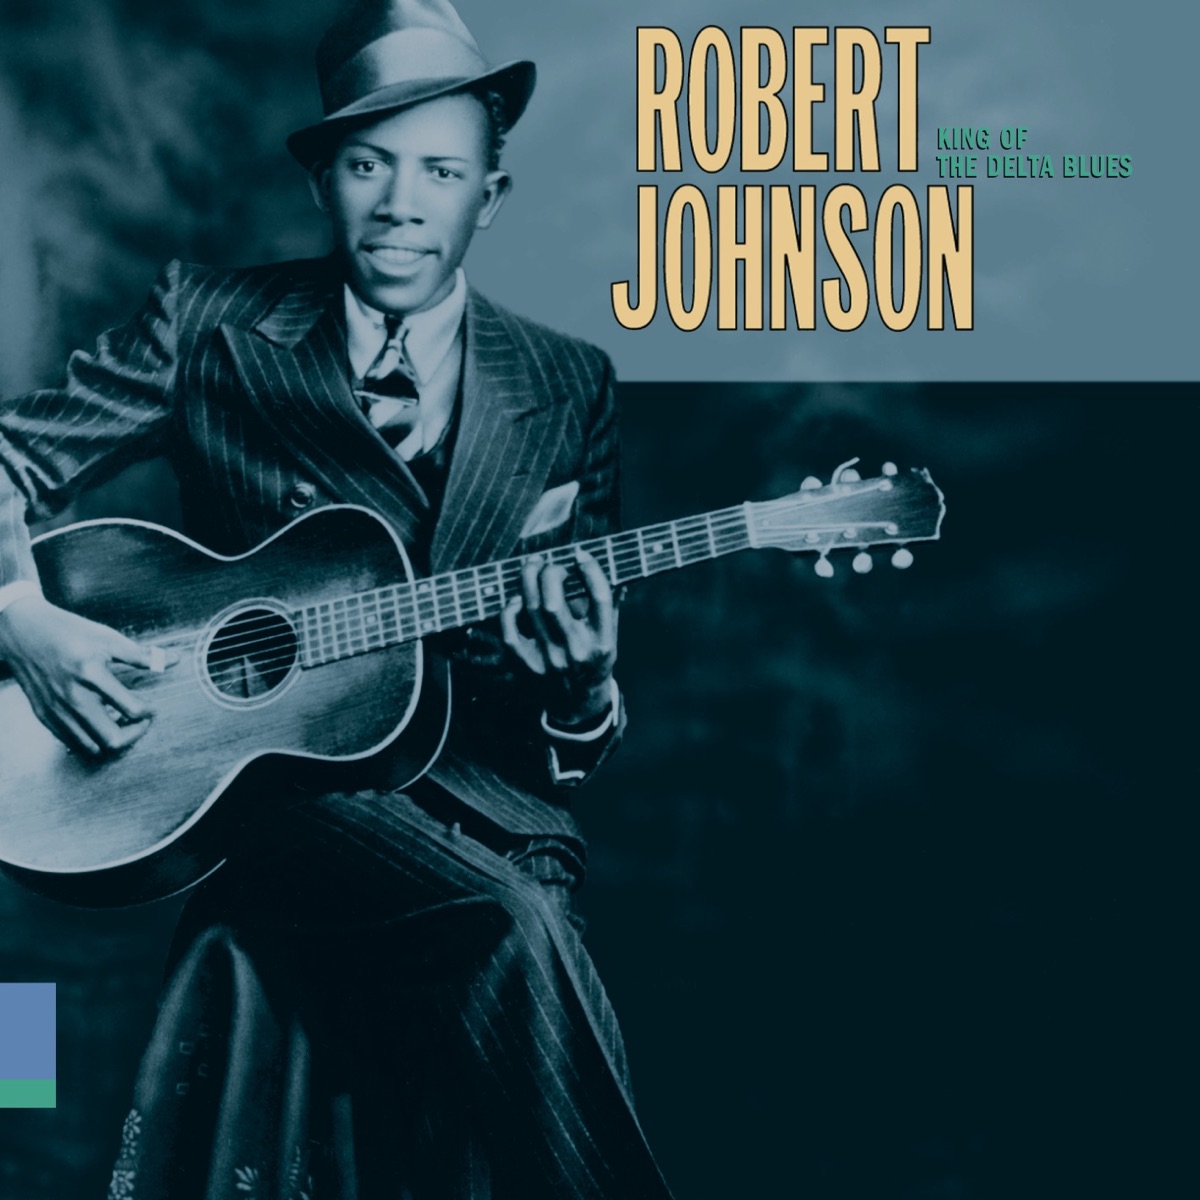 ‎The Complete Recordings - Album by Robert Johnson - Apple Music